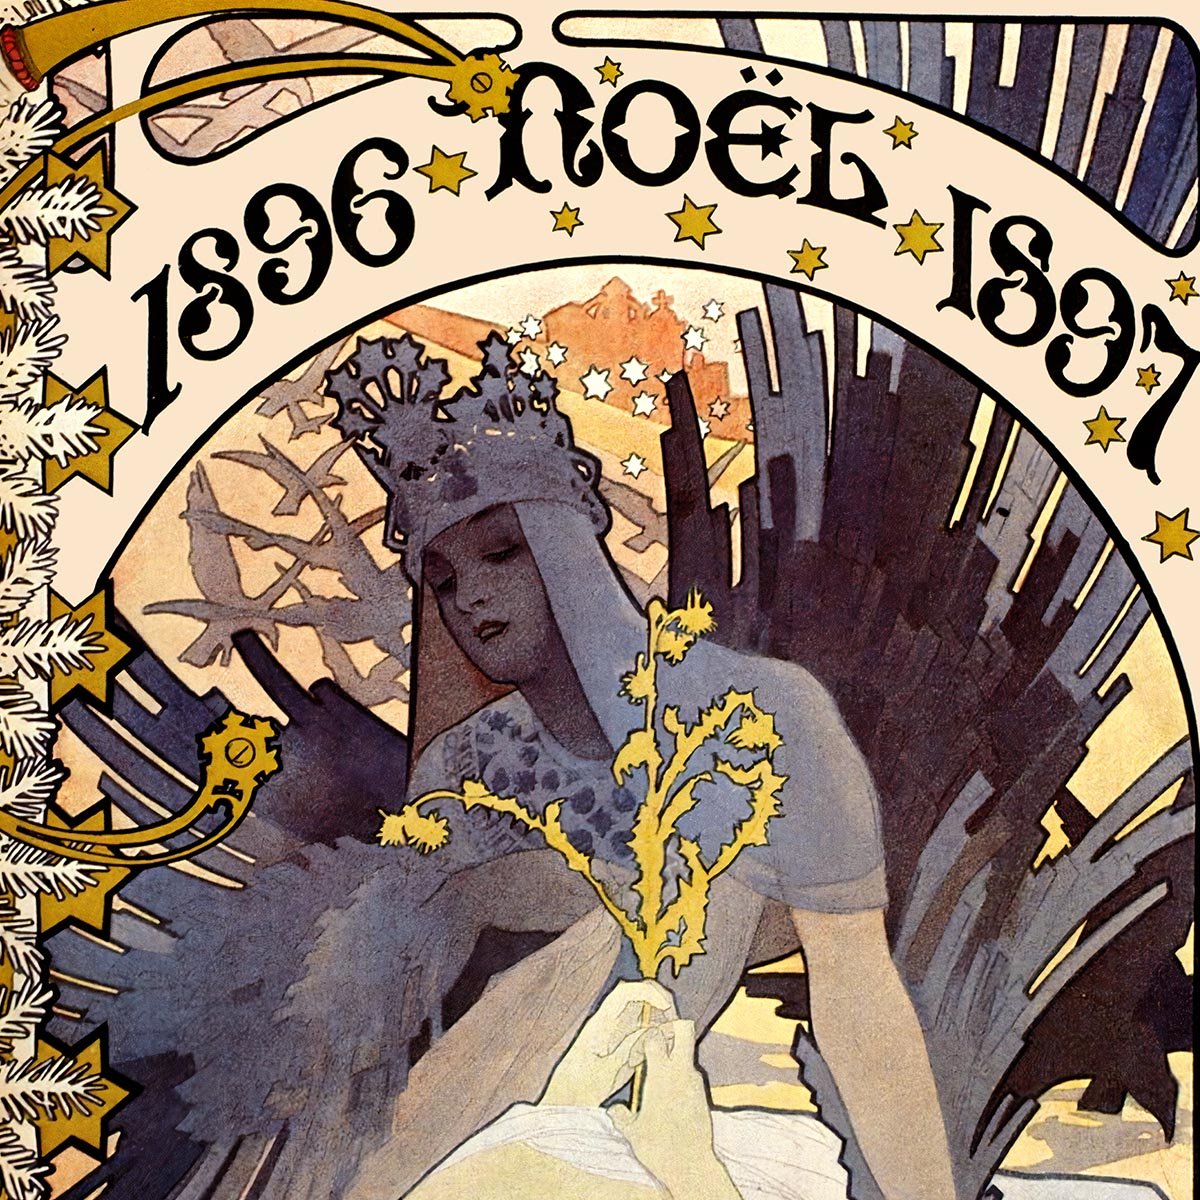 "1896 Noel 1897" by Alphonse Mucha